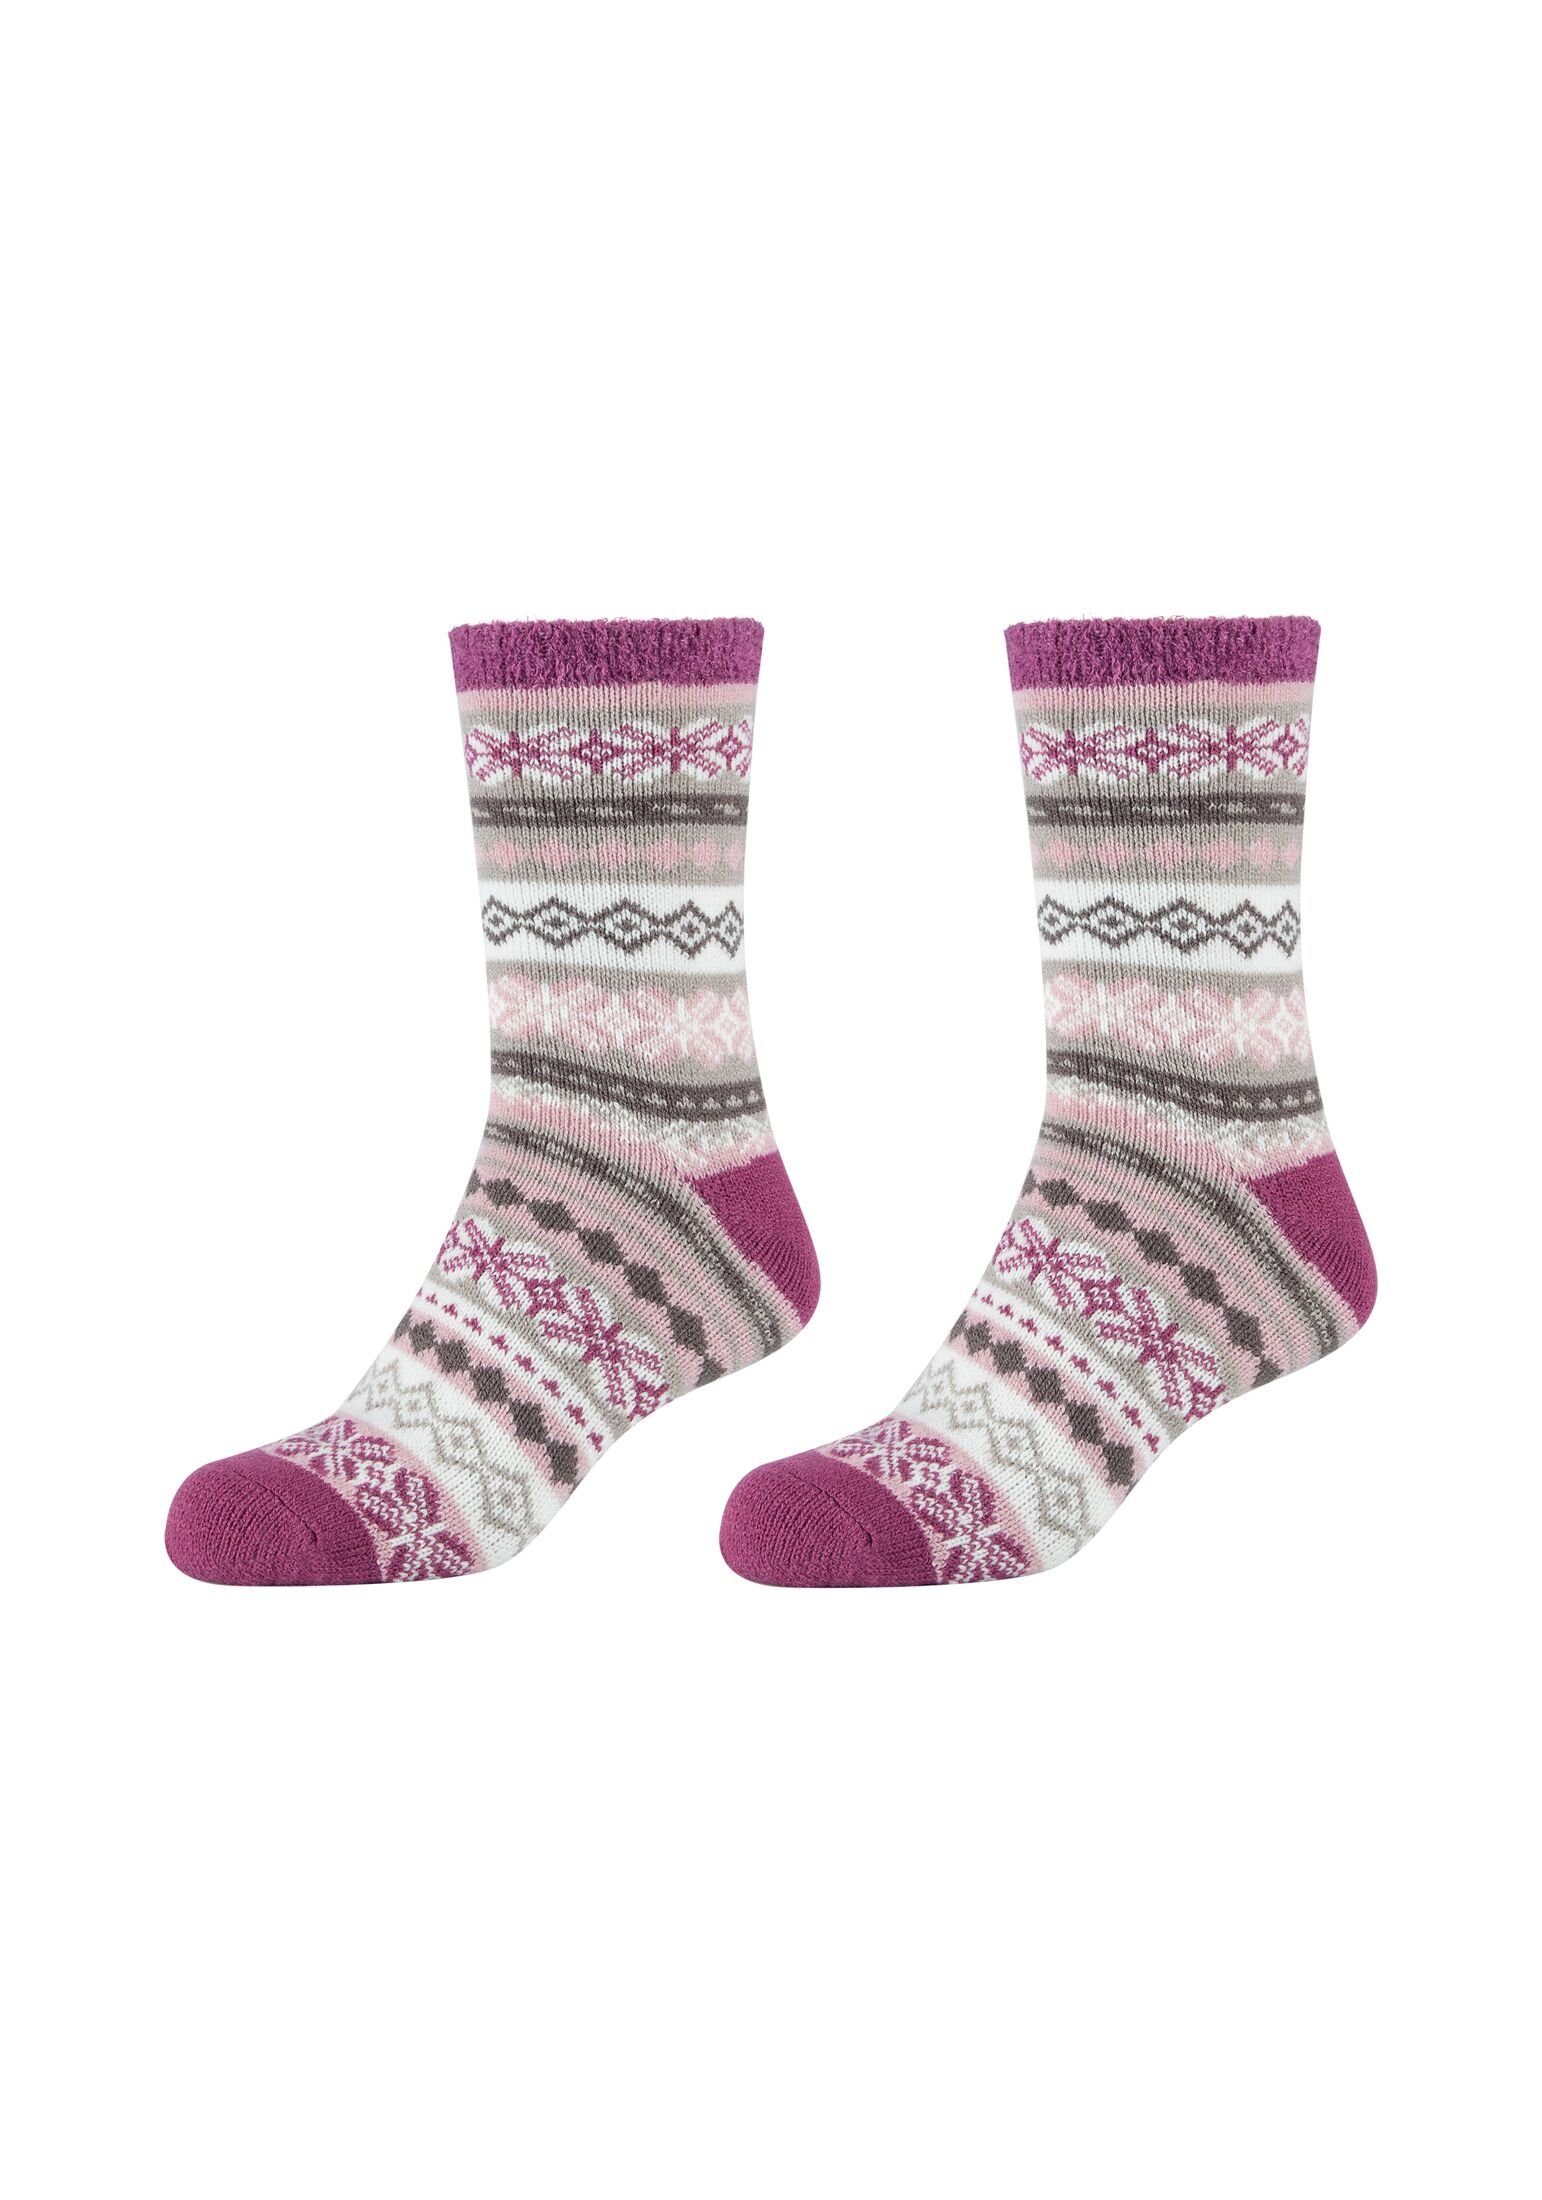 Camano Socken Socken Cosy Norweger Kuschelsocken Flauschig Warm Damen damson